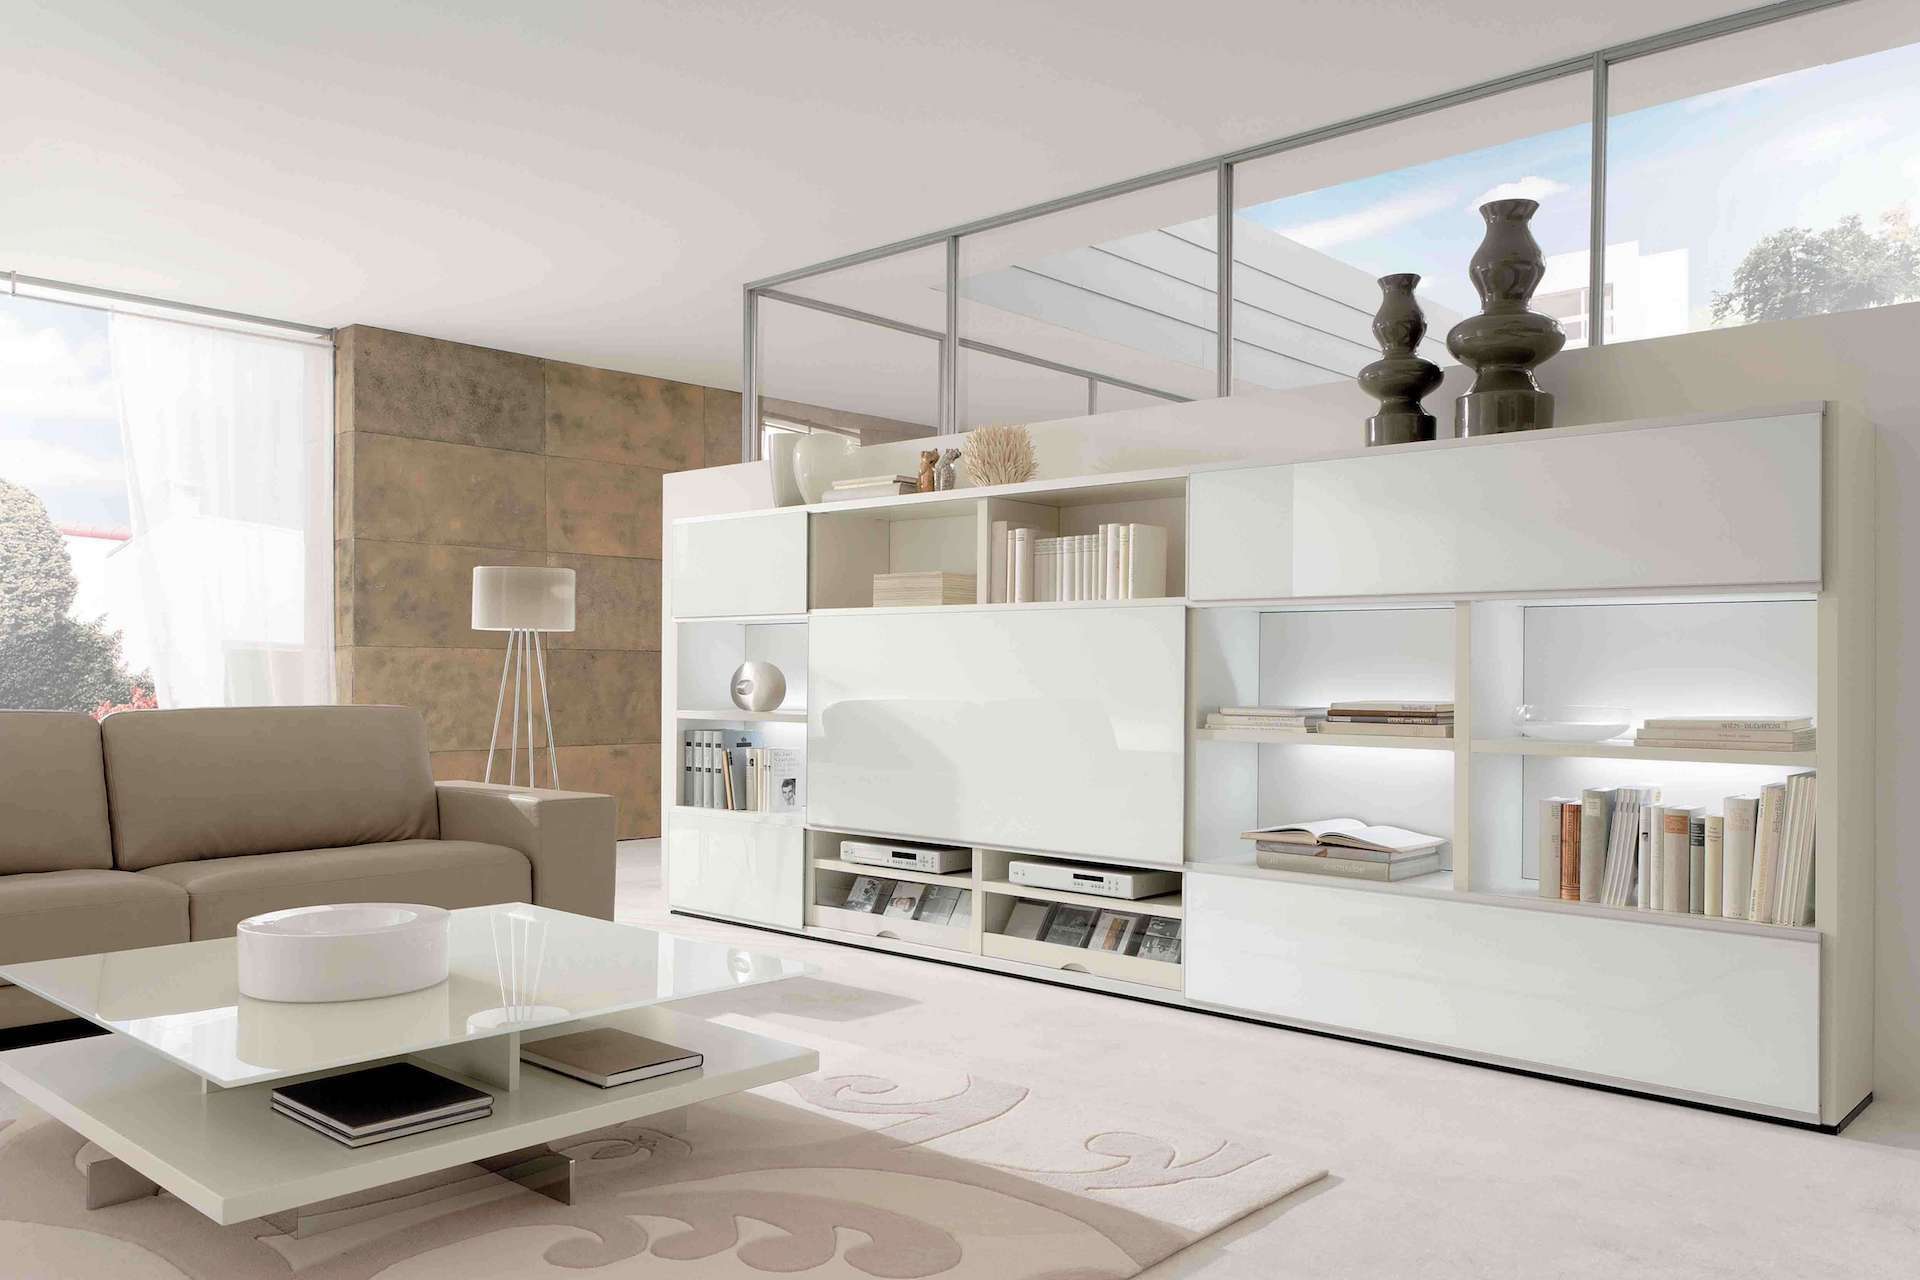 furniture-living-room-interior-white-beige-decoration - Copy.jpg